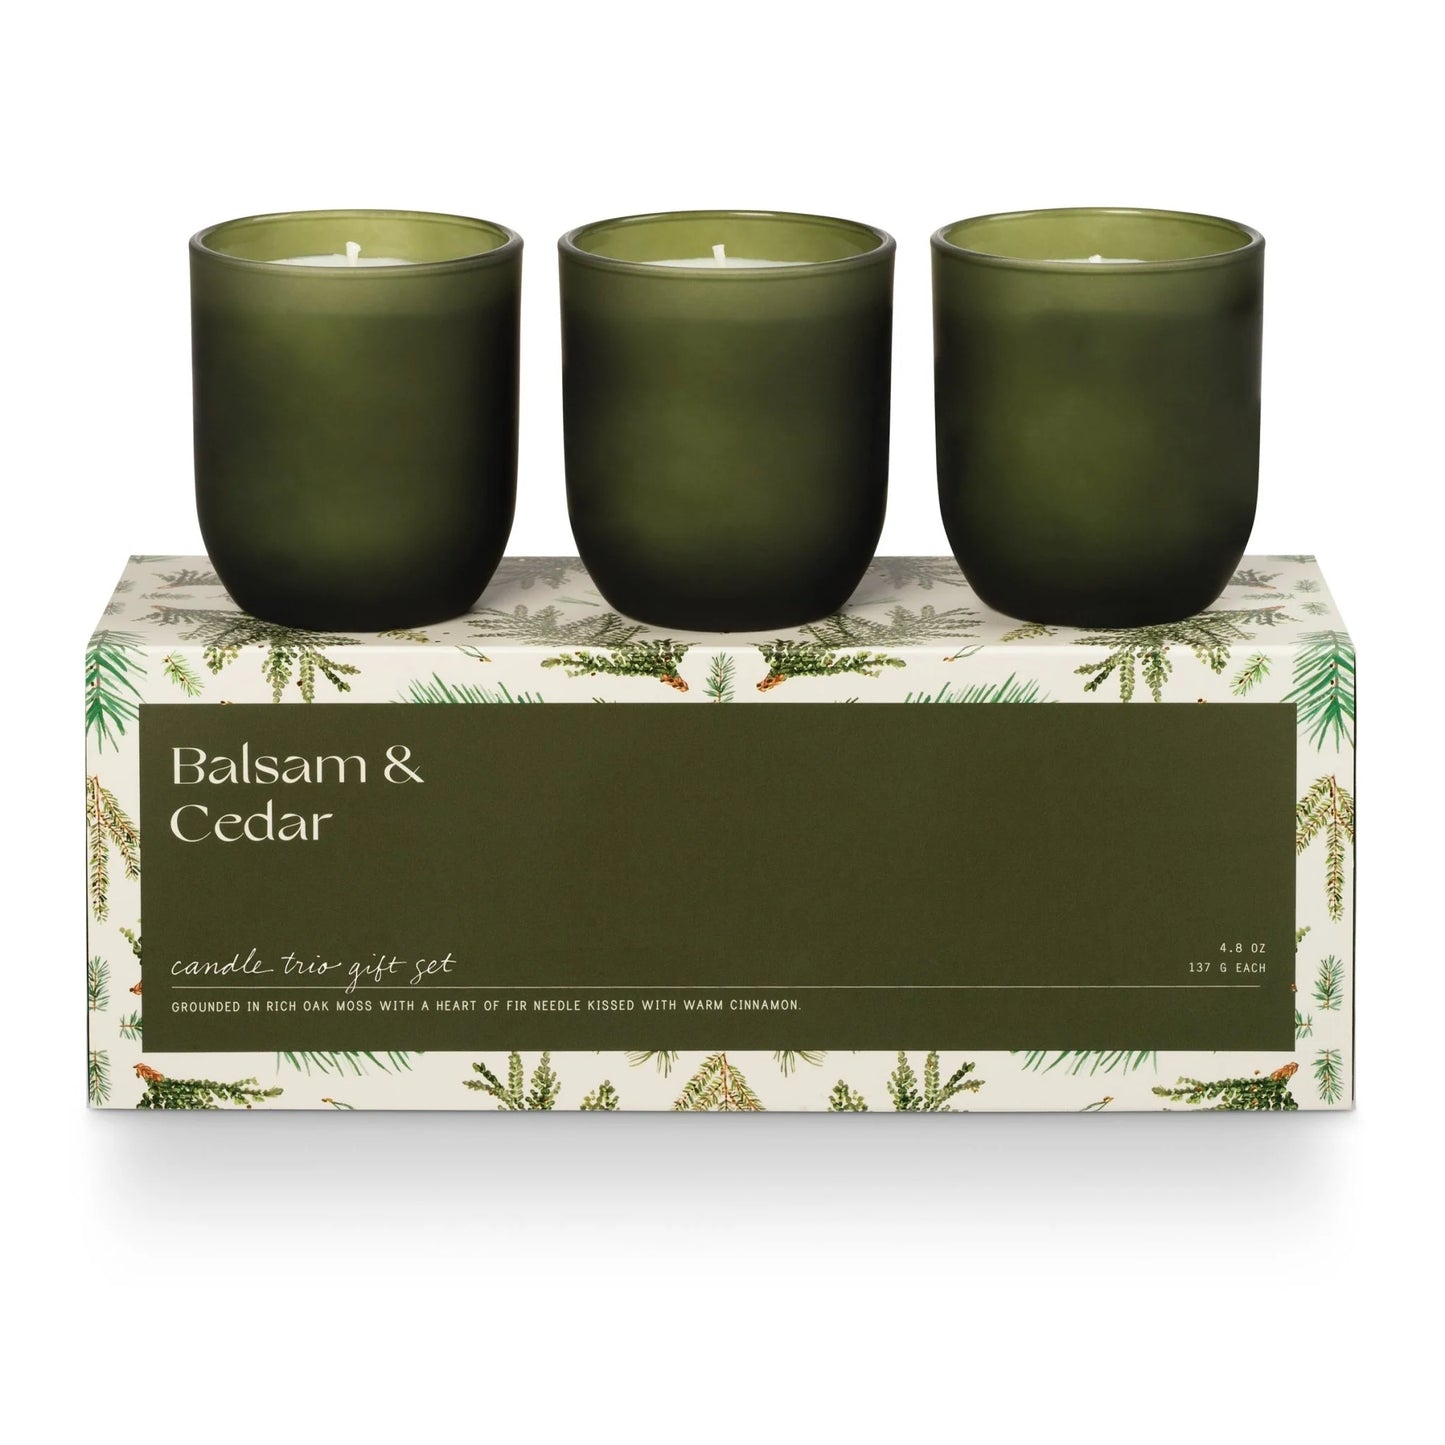 Illume Balsam & Cedar candle trio gift set